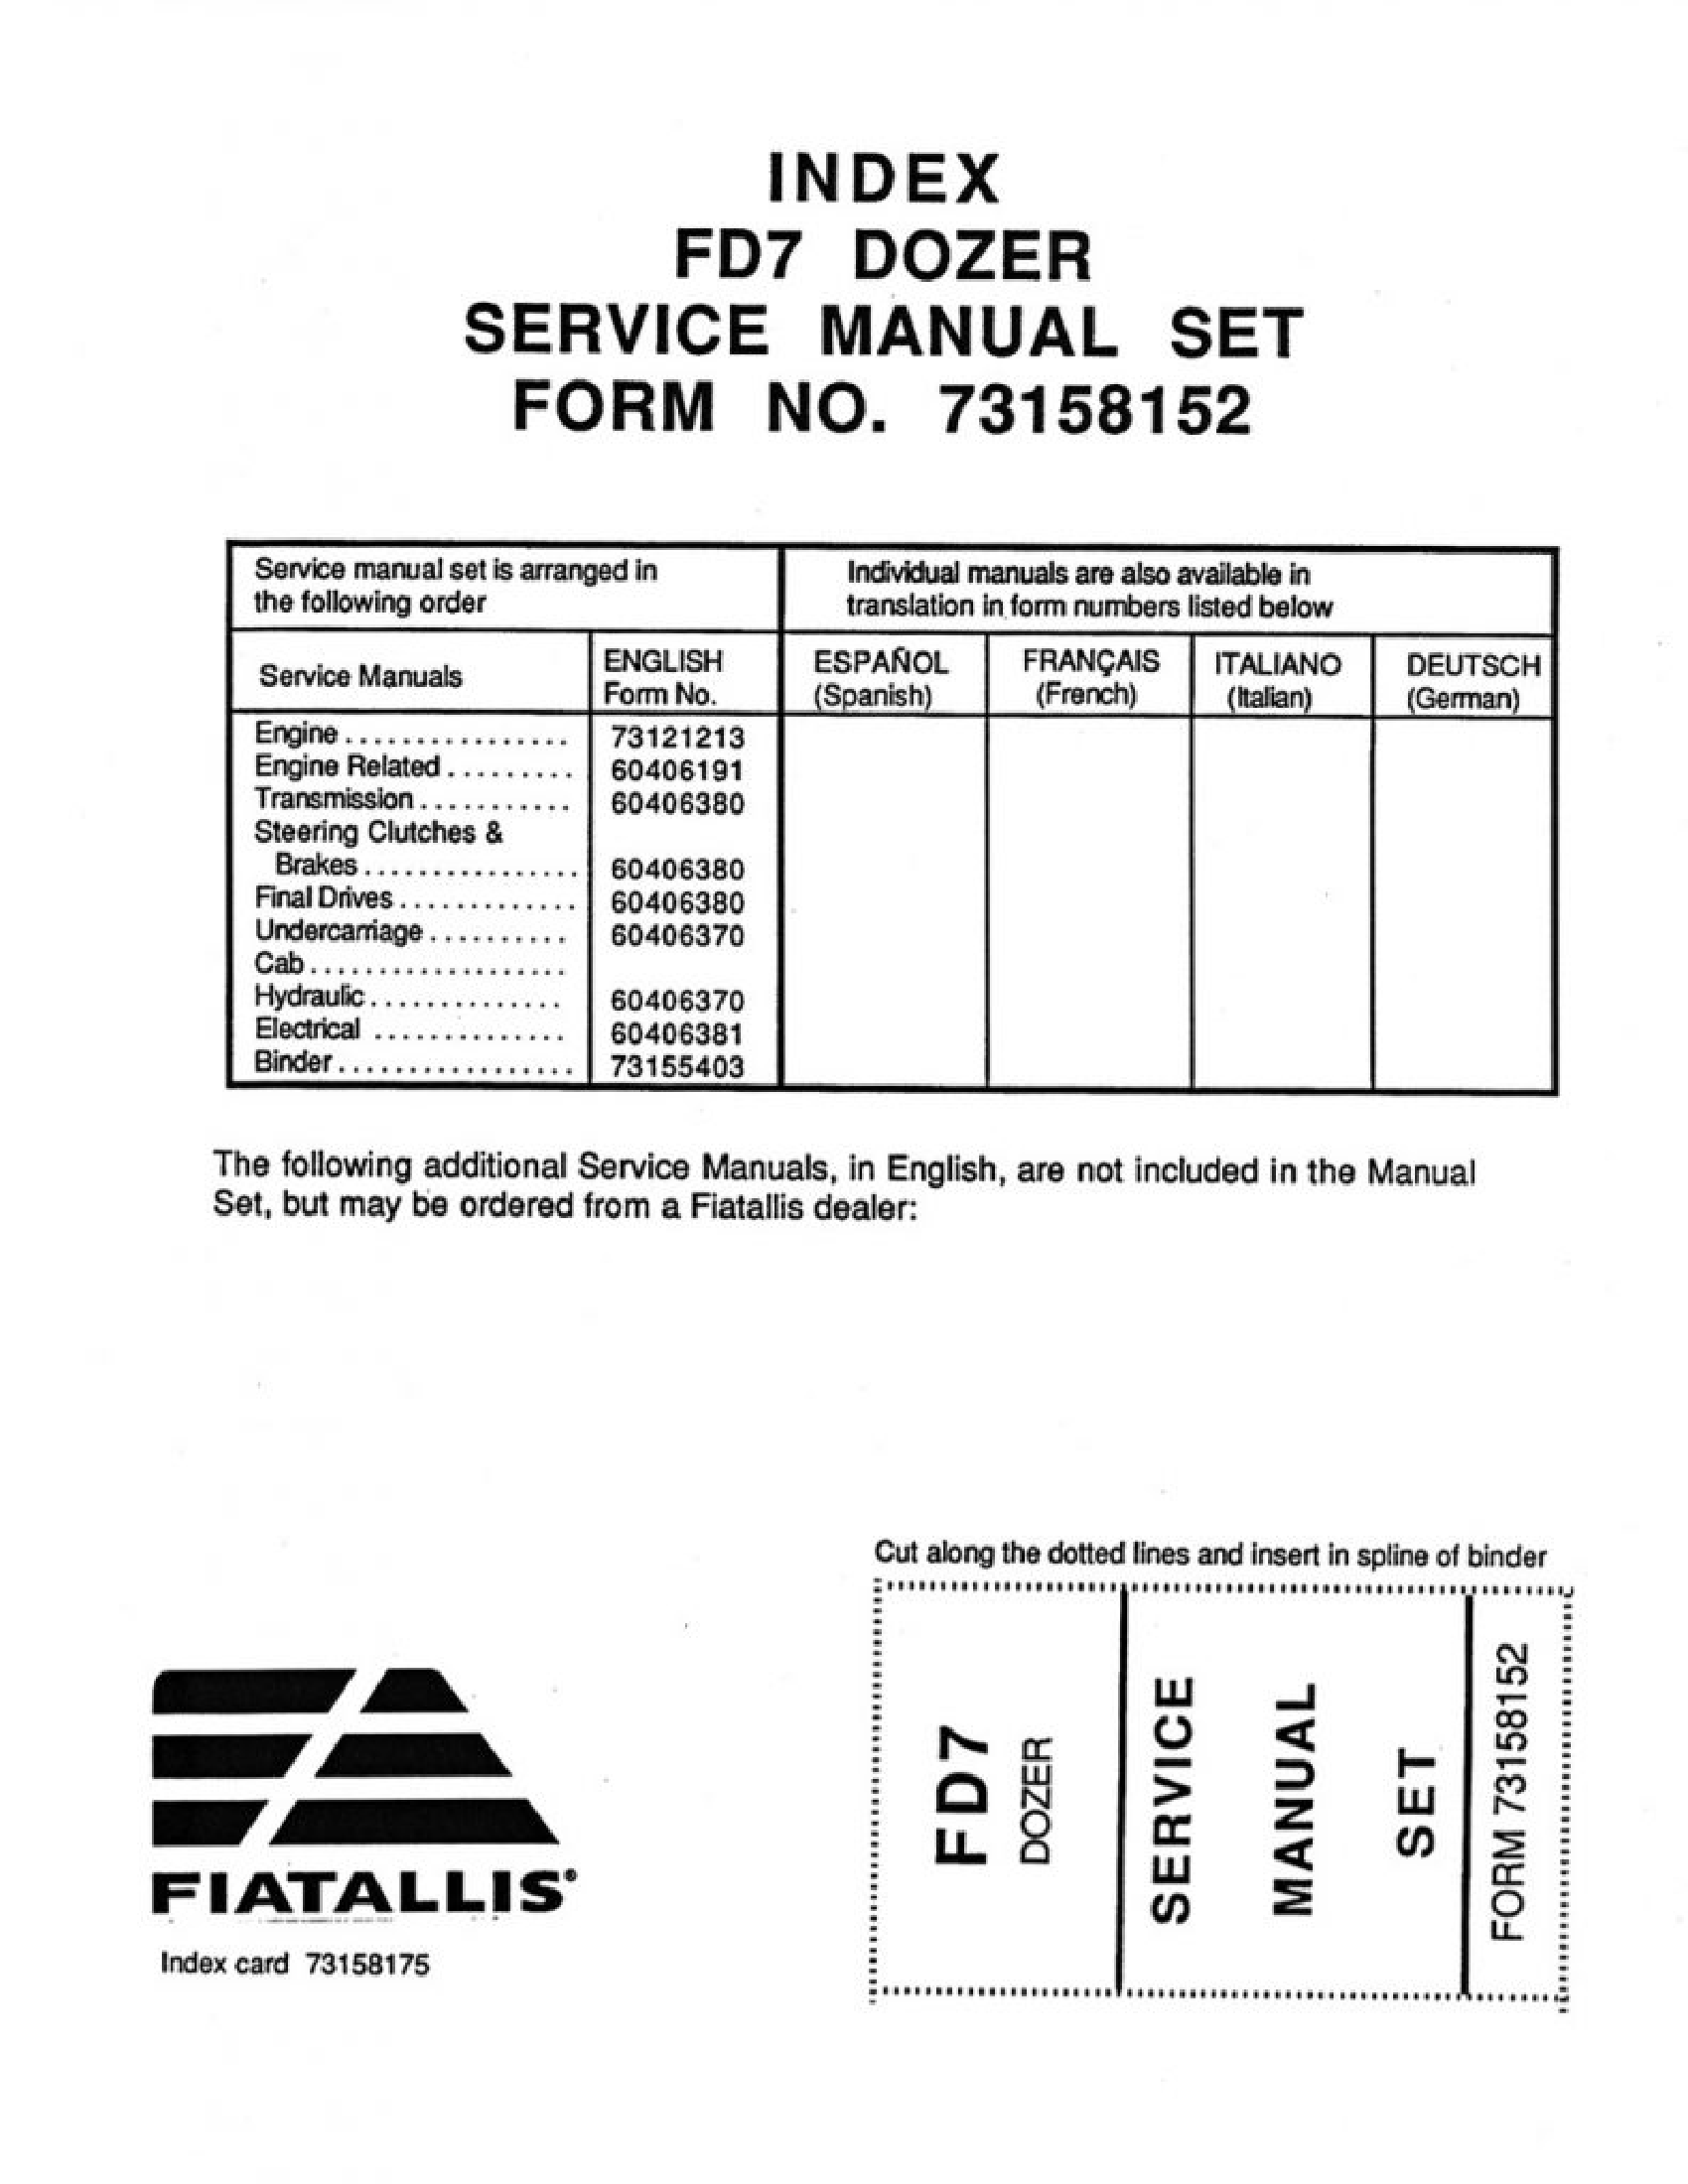 Fiat-Allis FD7 Dozer manual